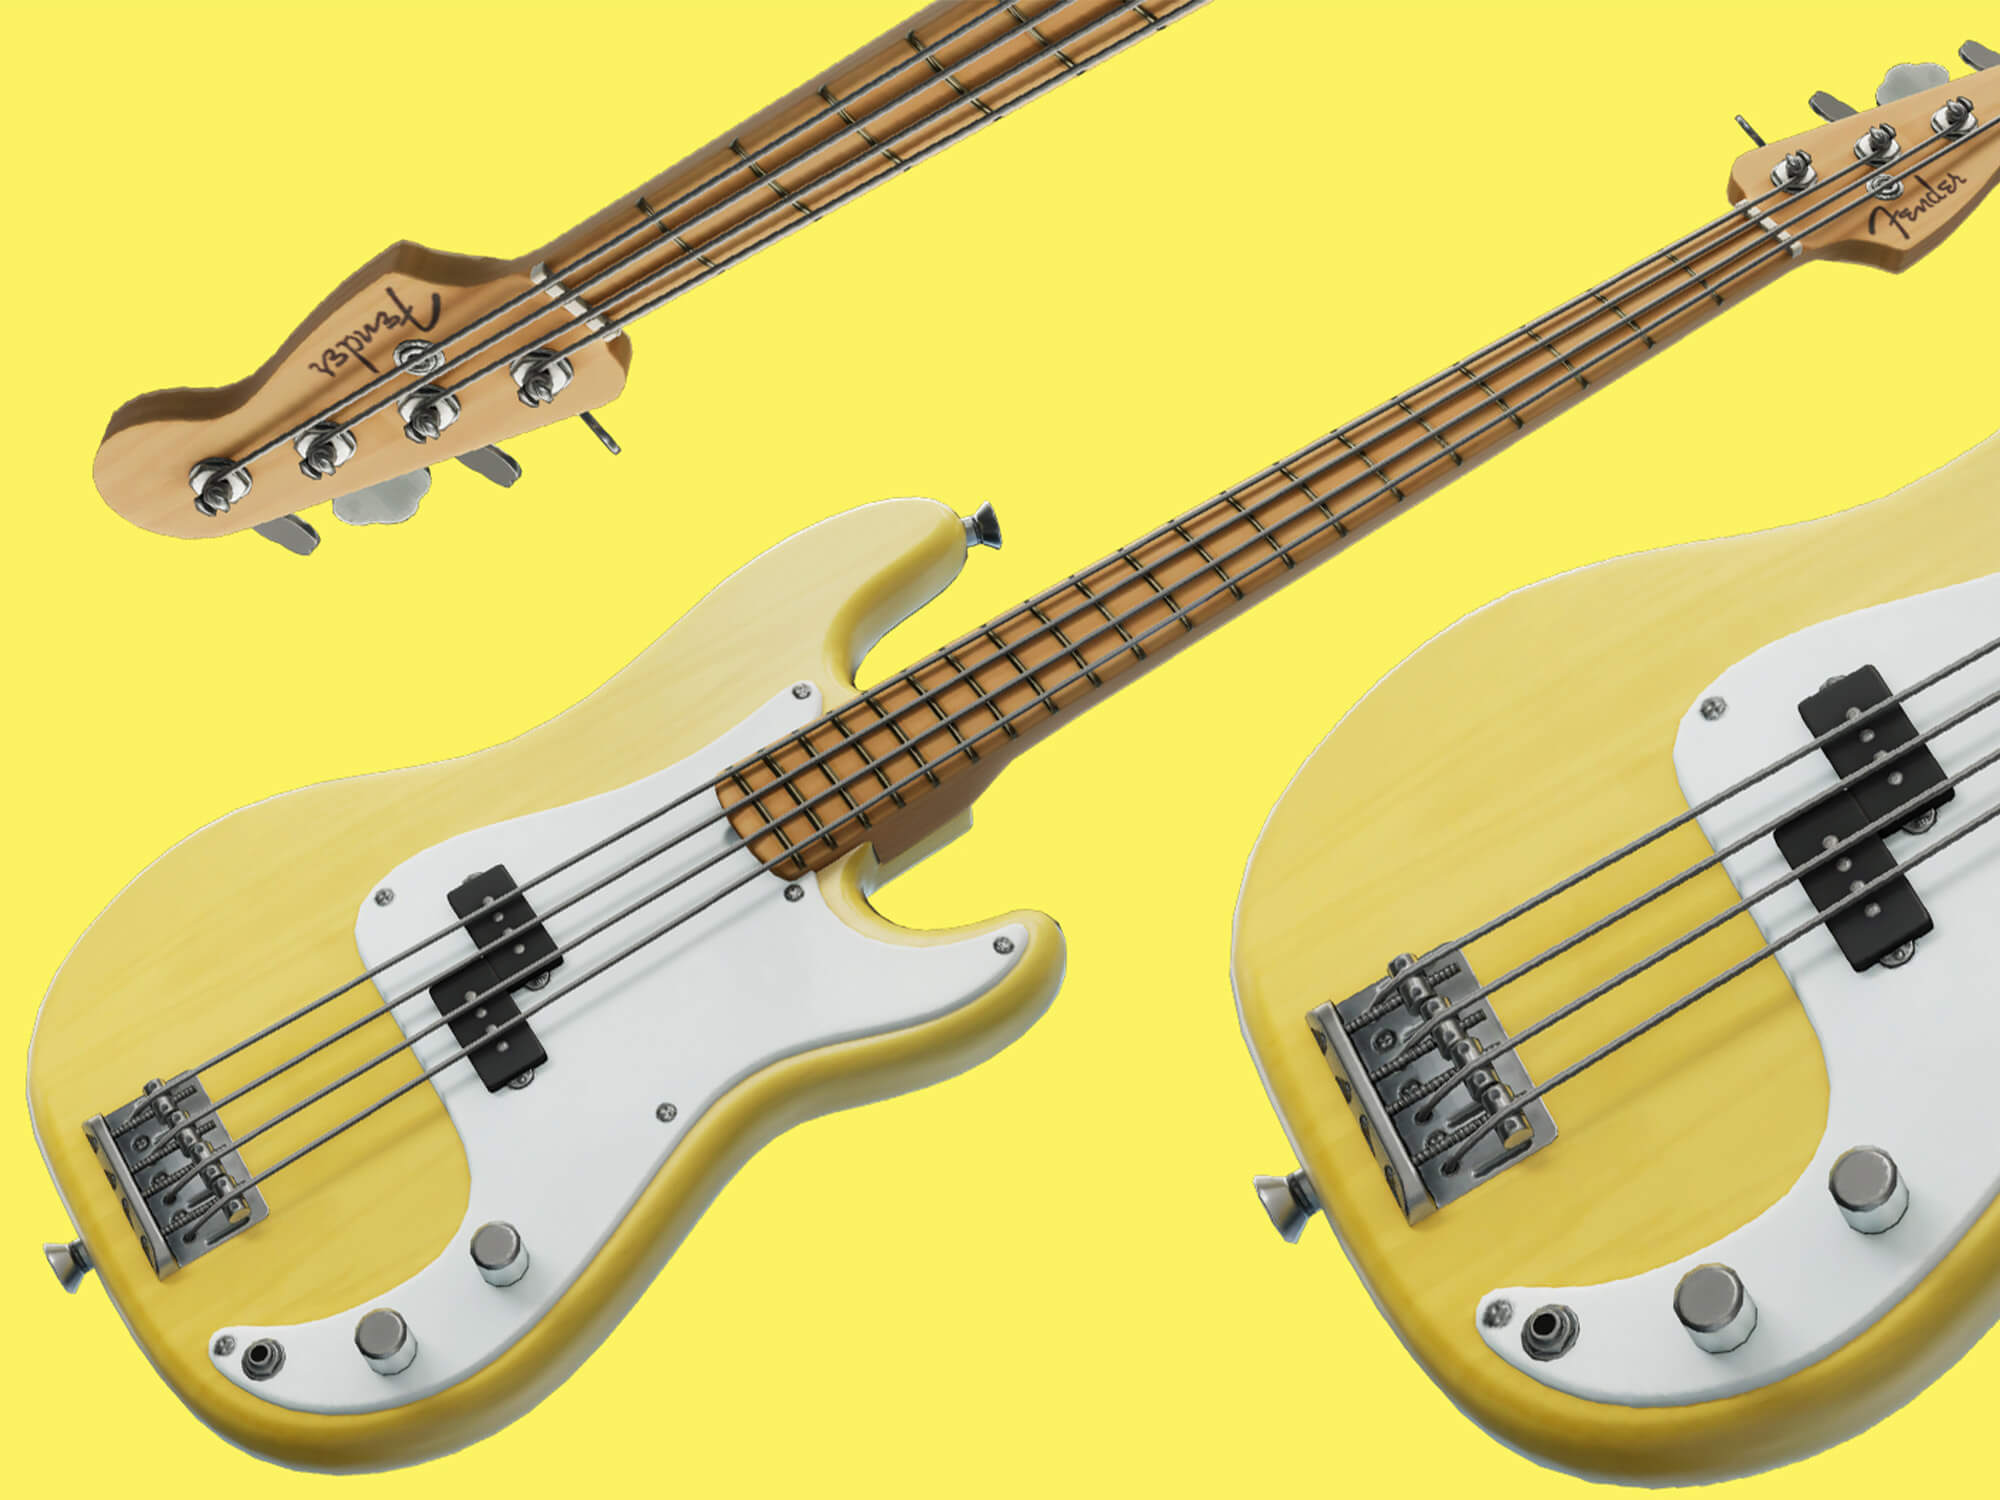 The Fortnite Fender Precision Bass in Buttercream